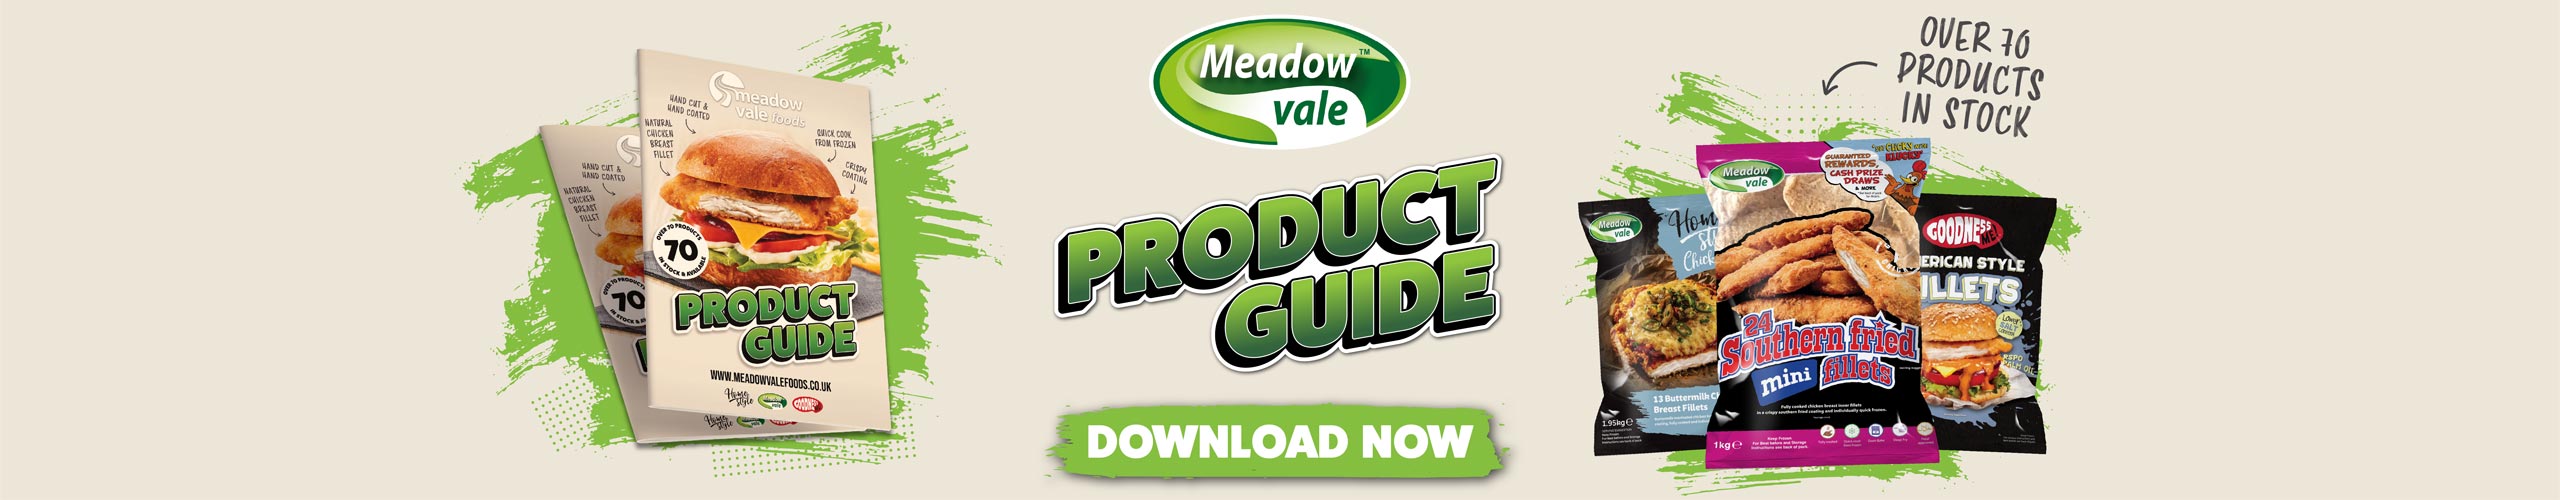 Meadow-Vale-Product-Guide-Desktop.jpg